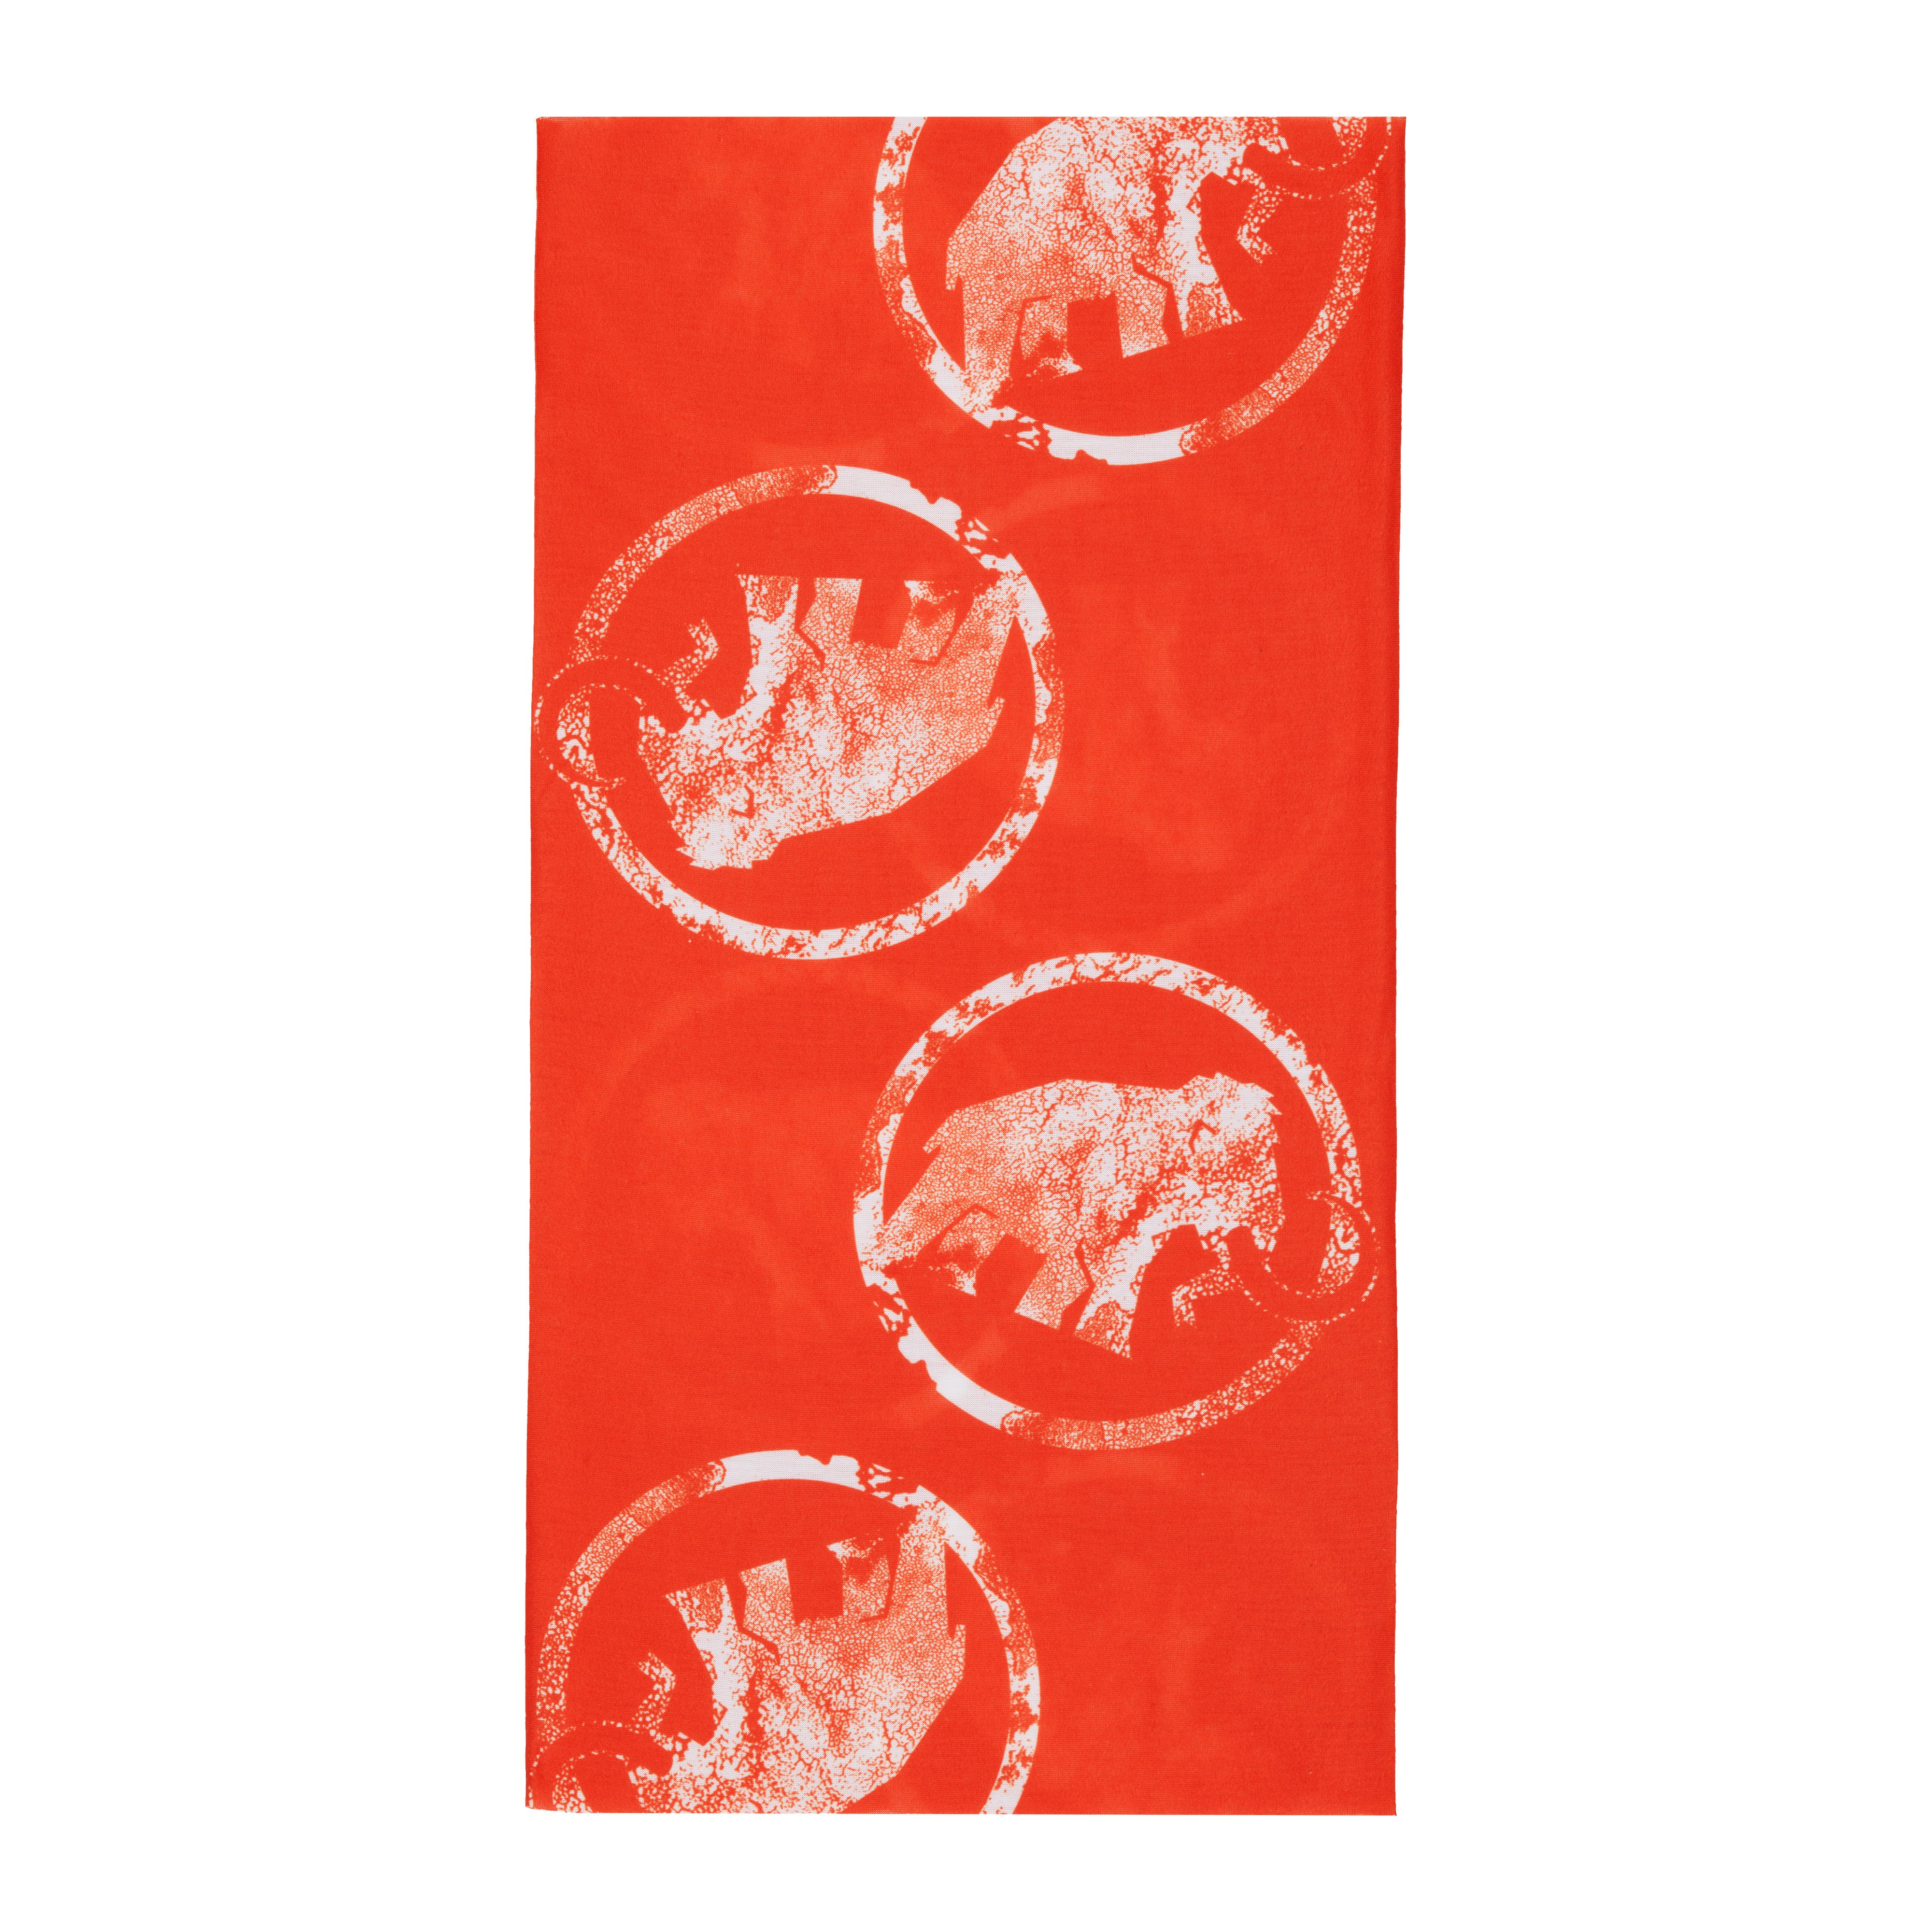 Mammut Neck Gaiter - hot red-white, one size product image